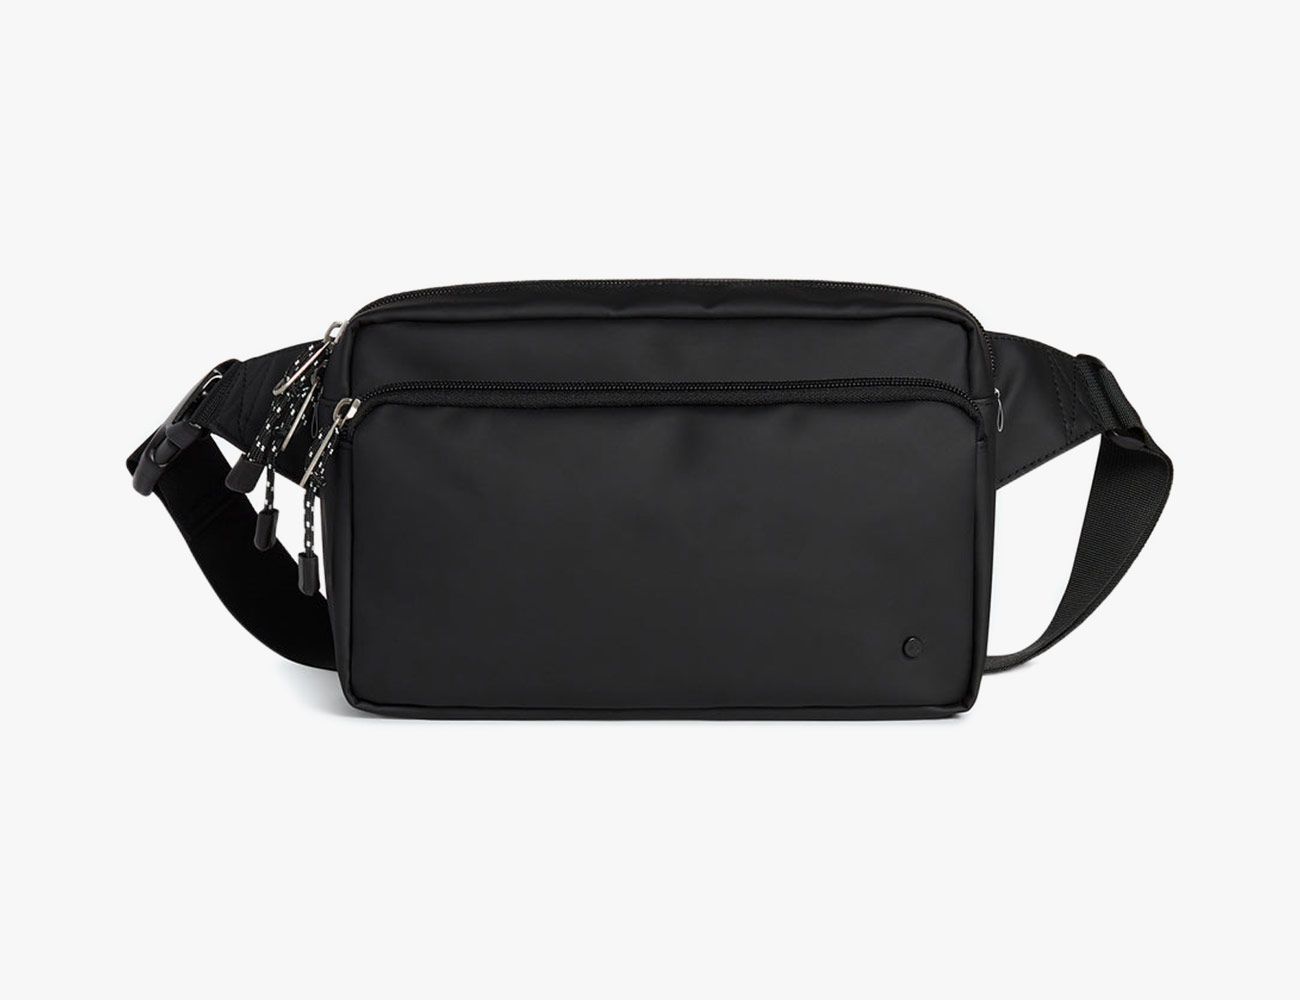 Men's Crossbody Bags - Where to Buy the Best Styles - VanityForbes